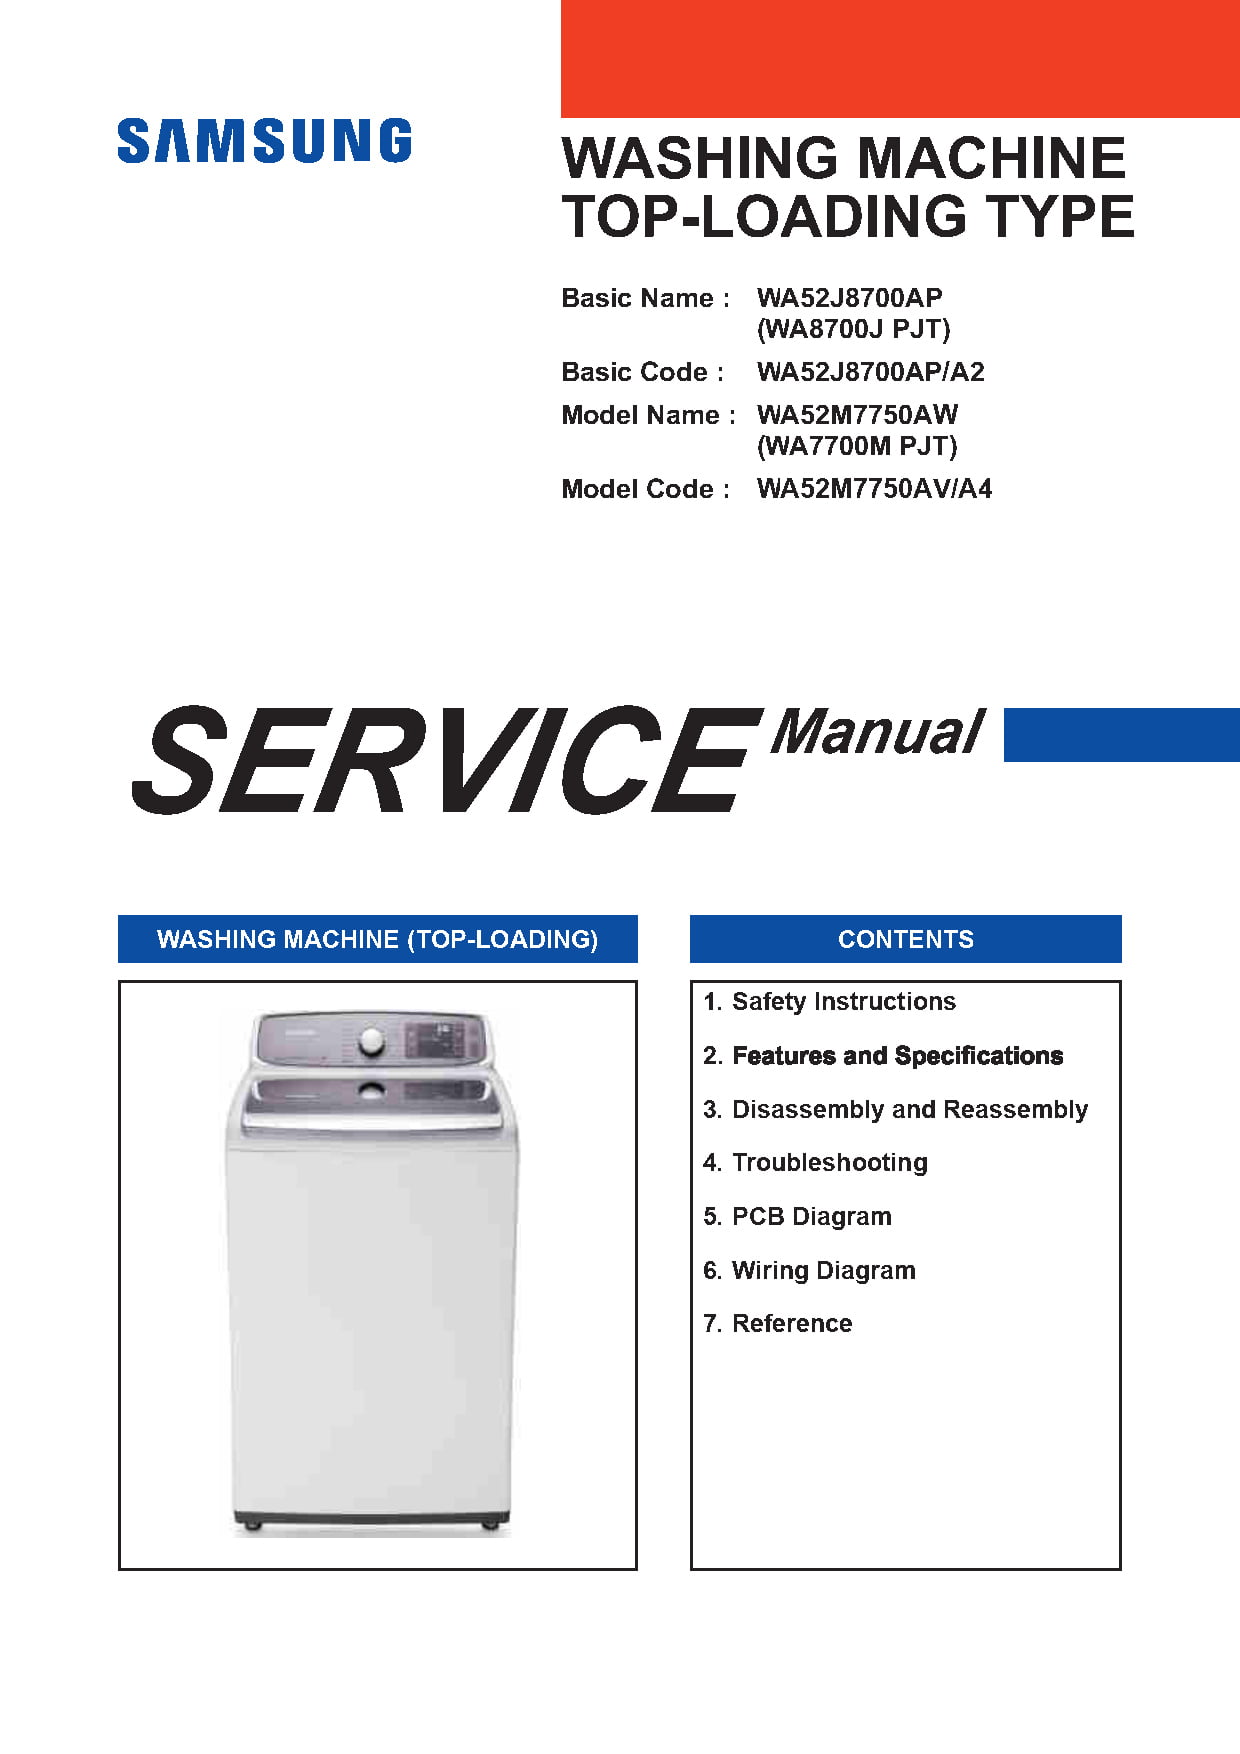 Samsung WA52M7750AV Service Manual